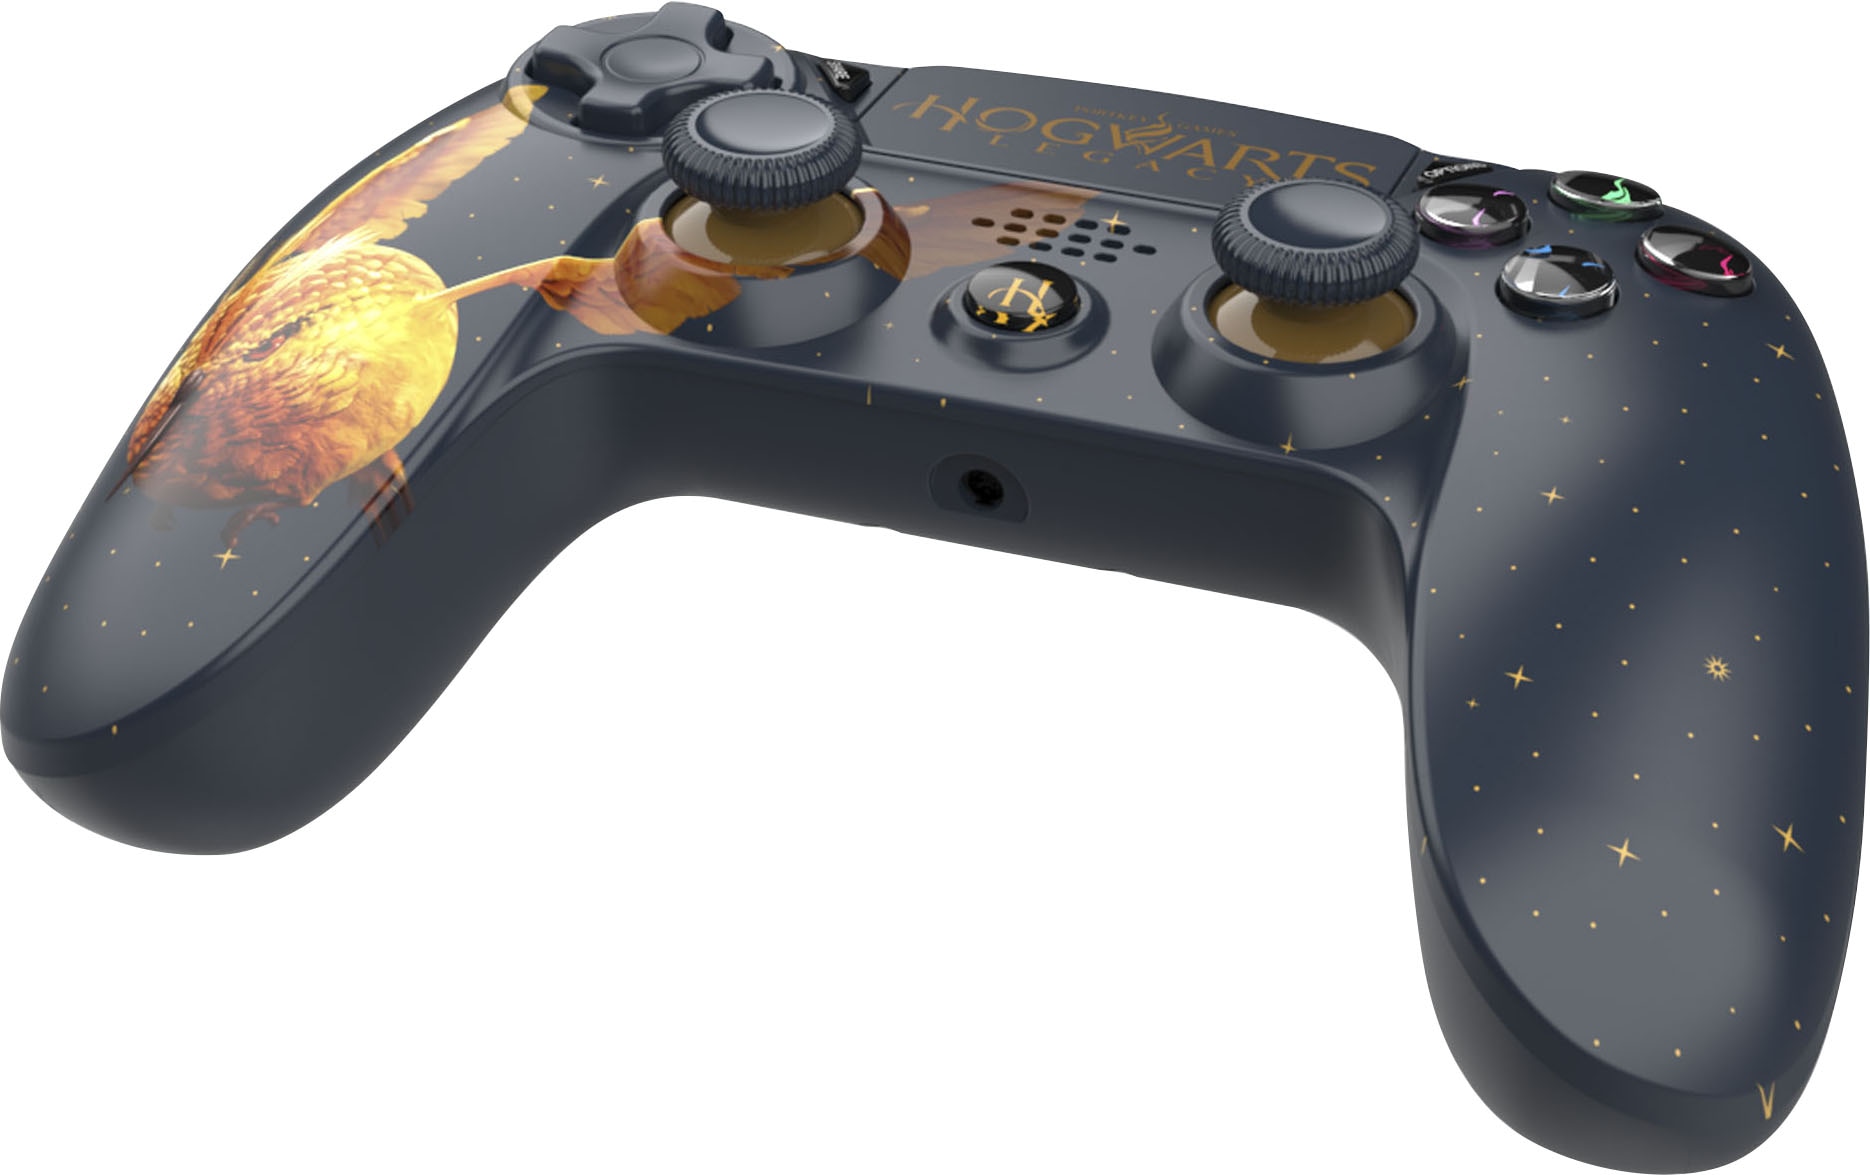 4-Controller Shop »Golden Freaks im Online PlayStation Controller« Wireless jetzt Snidget OTTO and Geeks